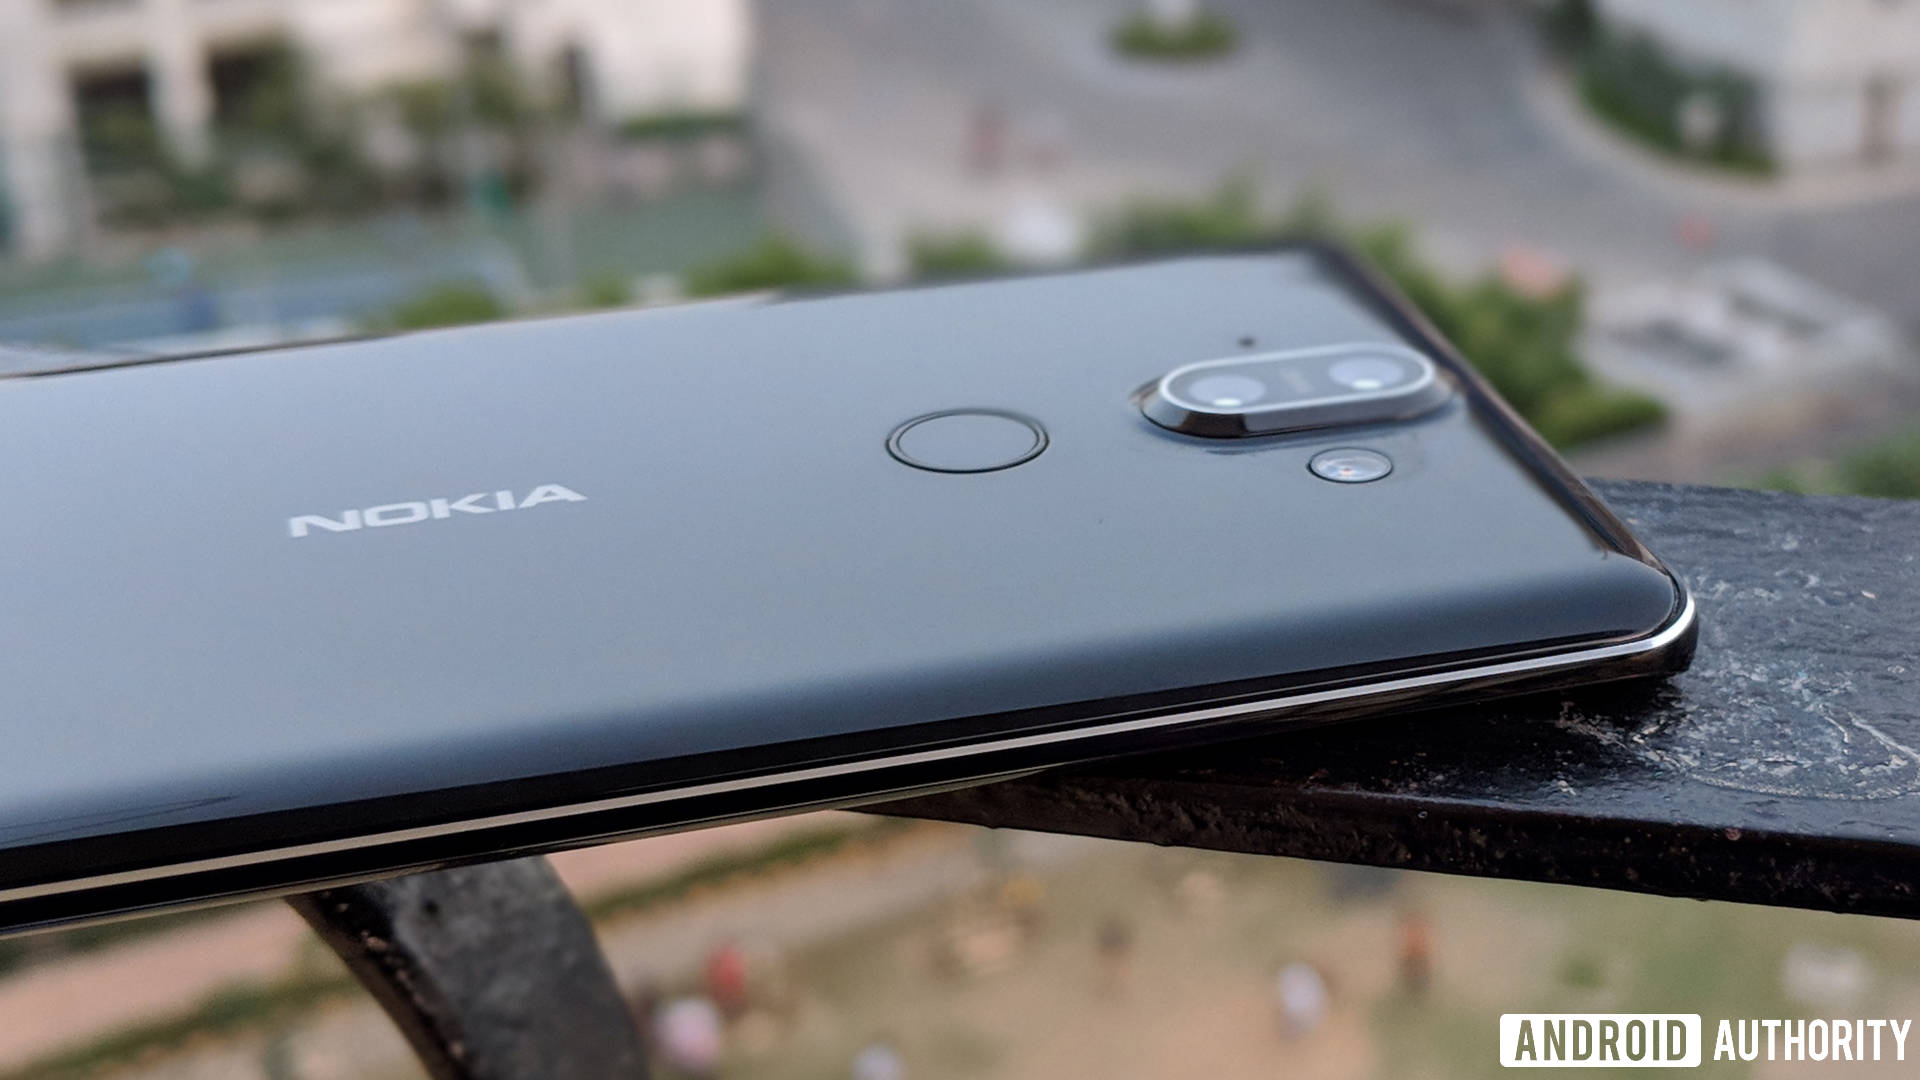 Nokia 8 Sirocco review - camera bump, fingerprint scanner